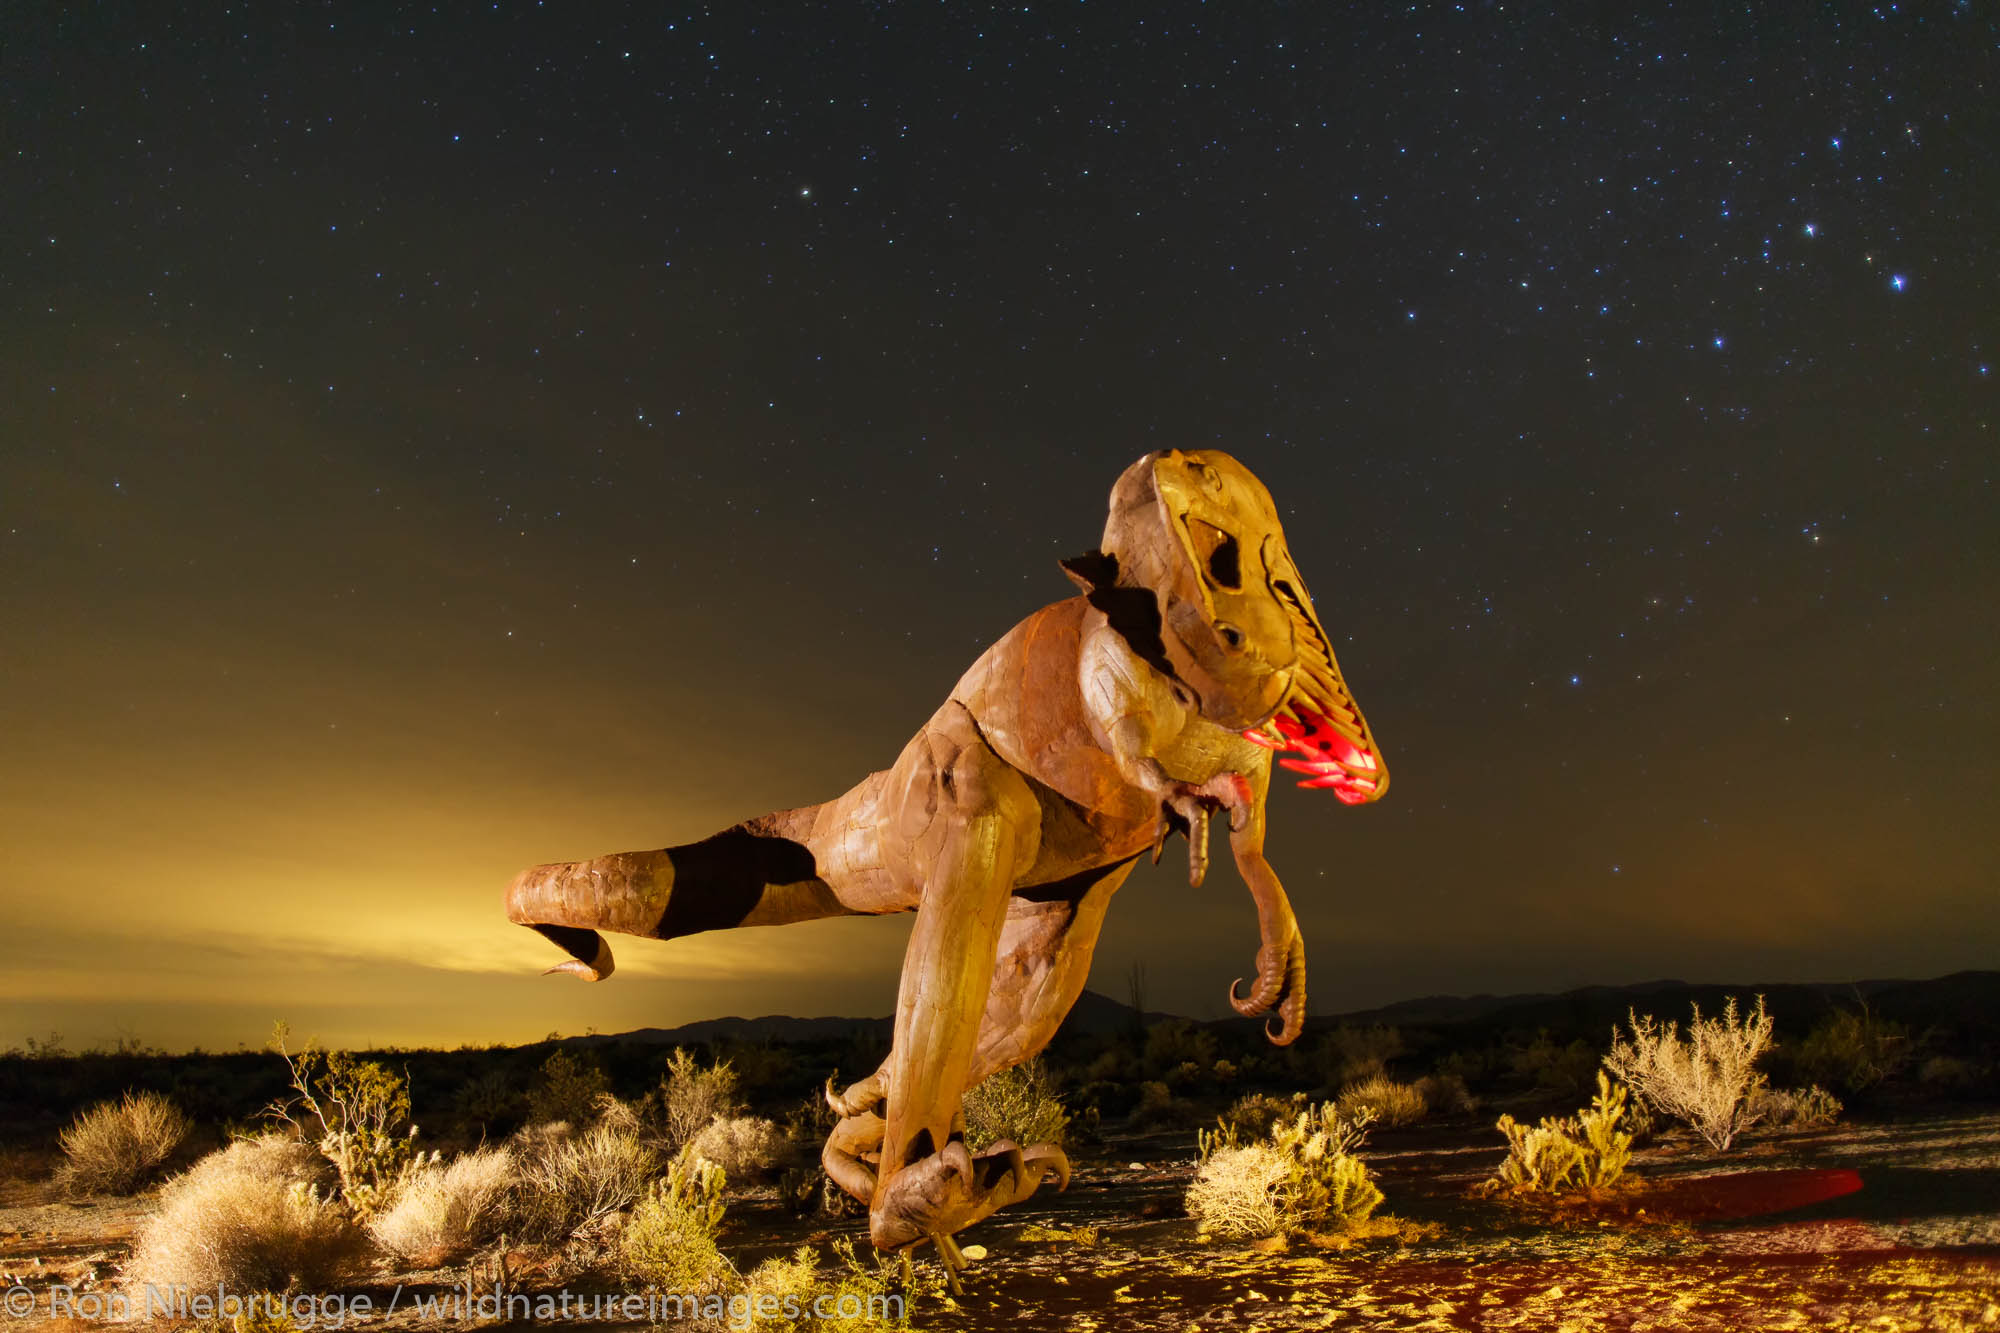 Metal sculpture at night, Borrego Springs, California.